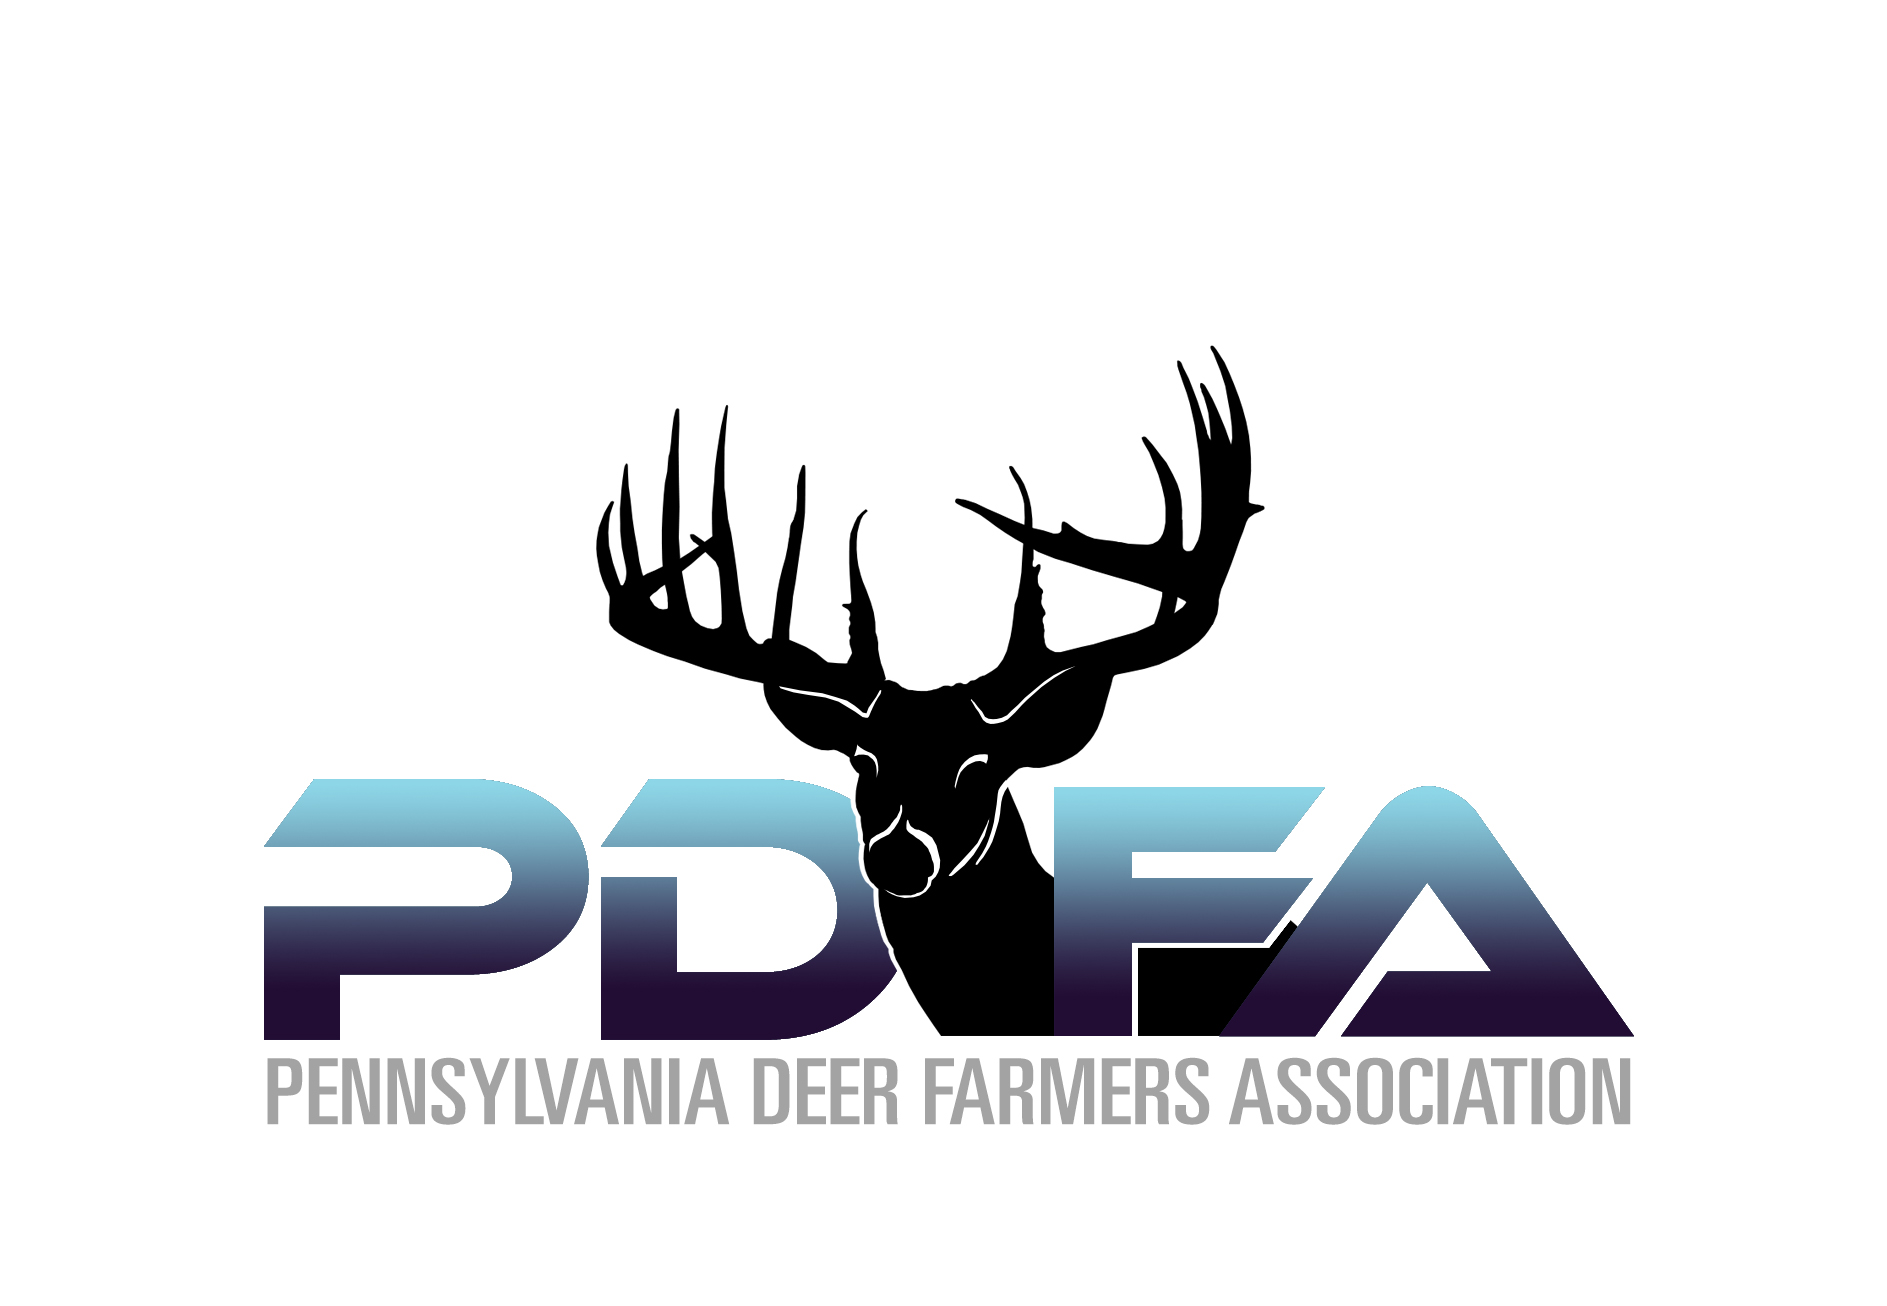 The Pennsylvania Deer Farmers Association